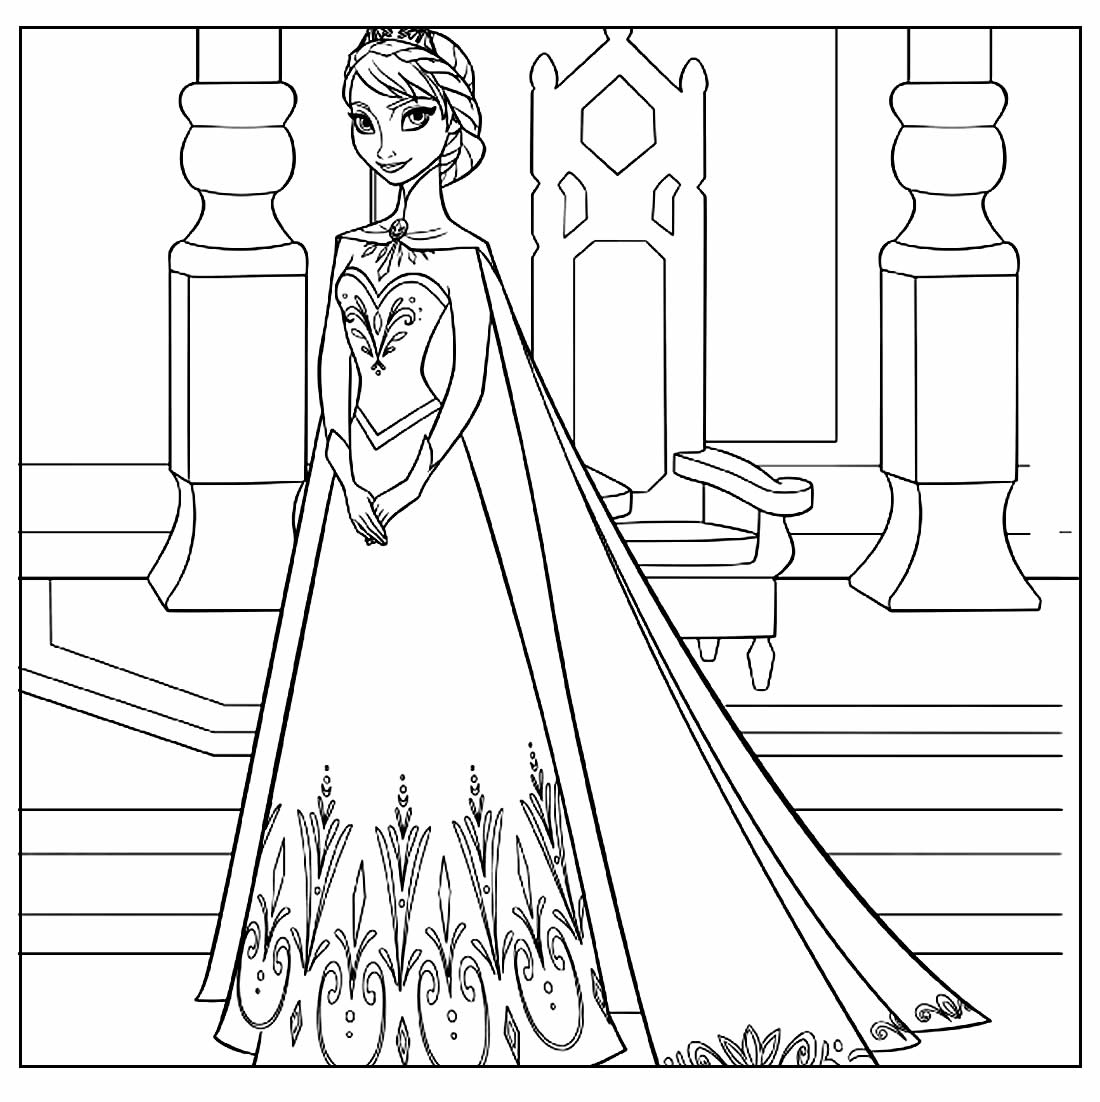 Desenho para pintar e colorir da Princesa Elsa